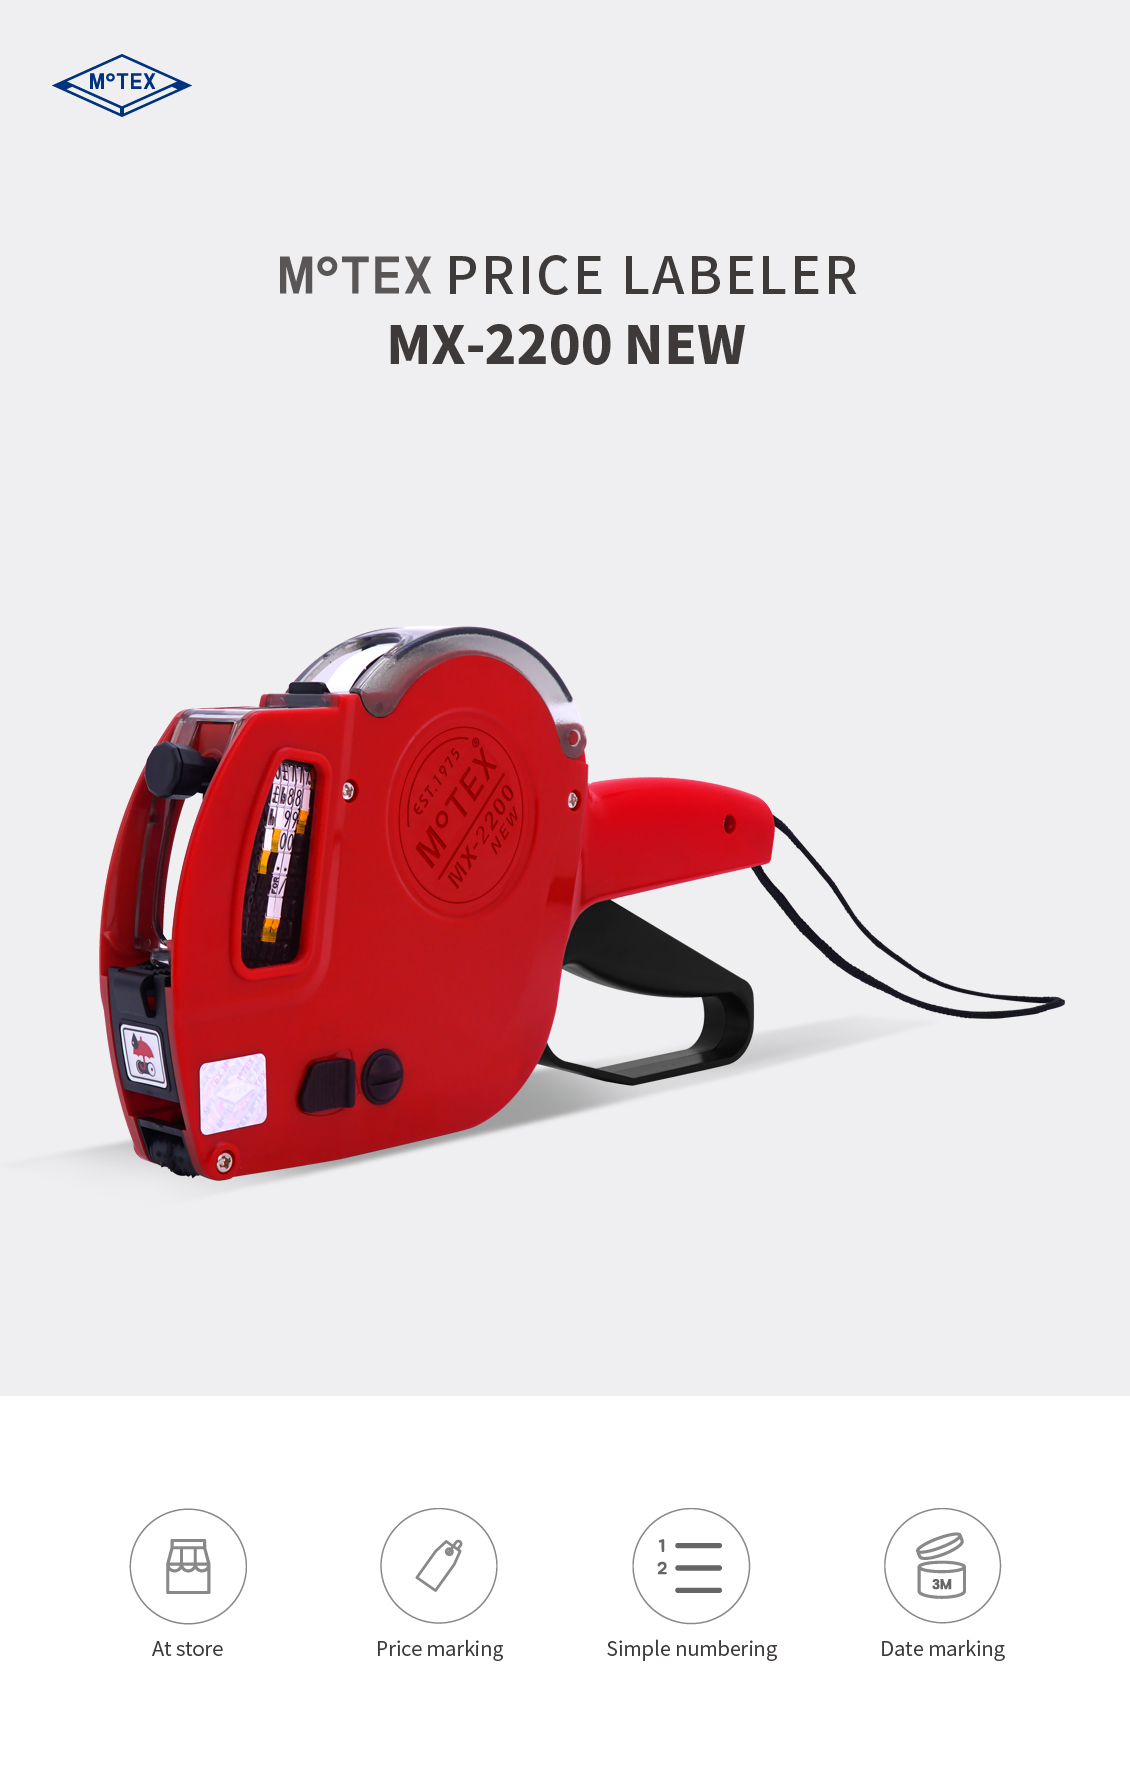 Motex MX-2200 Label Price Gun Brand New 